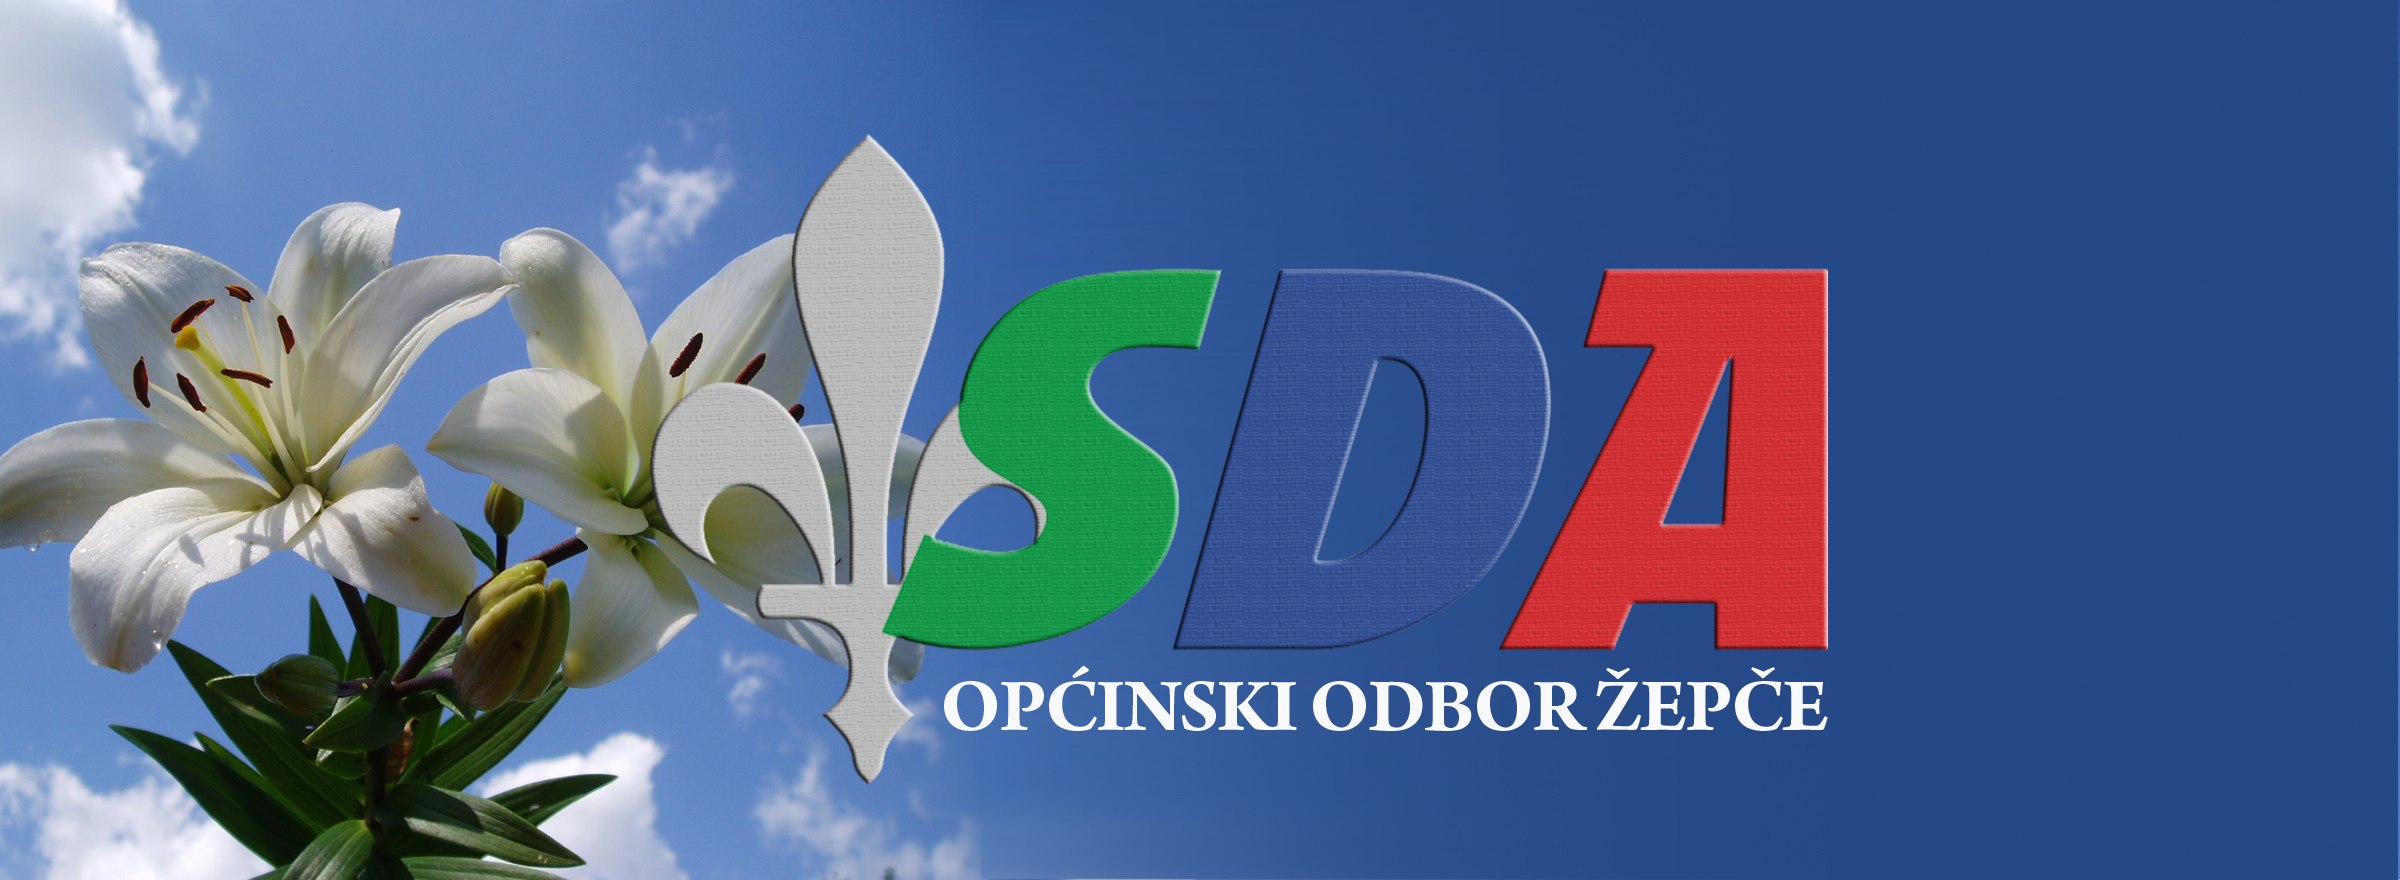 sda-banner3